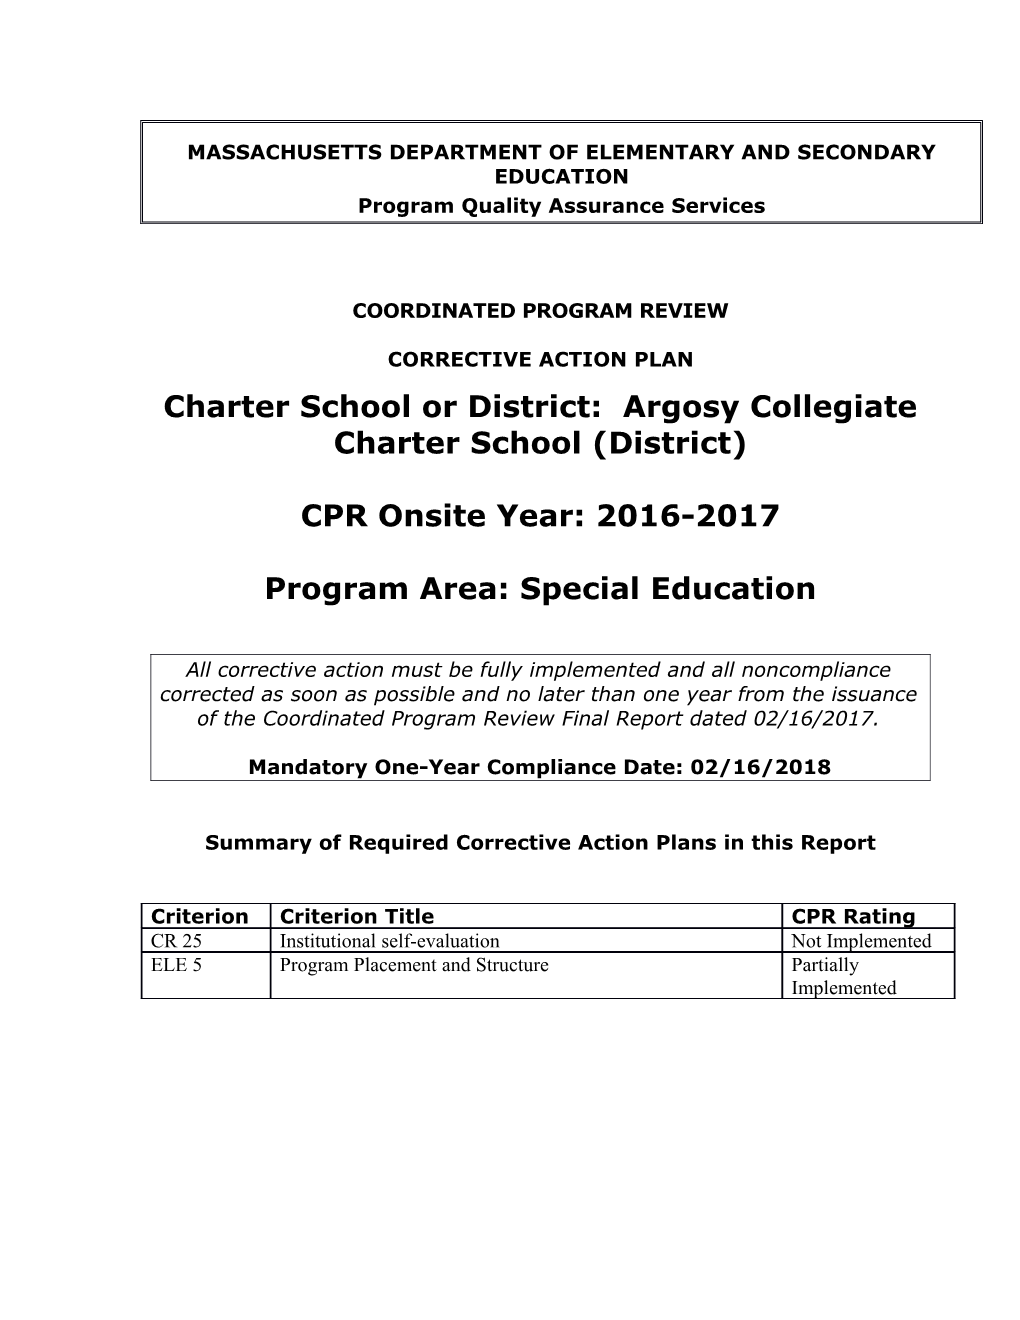 Argosy Collegiate Charter School CAP 2017